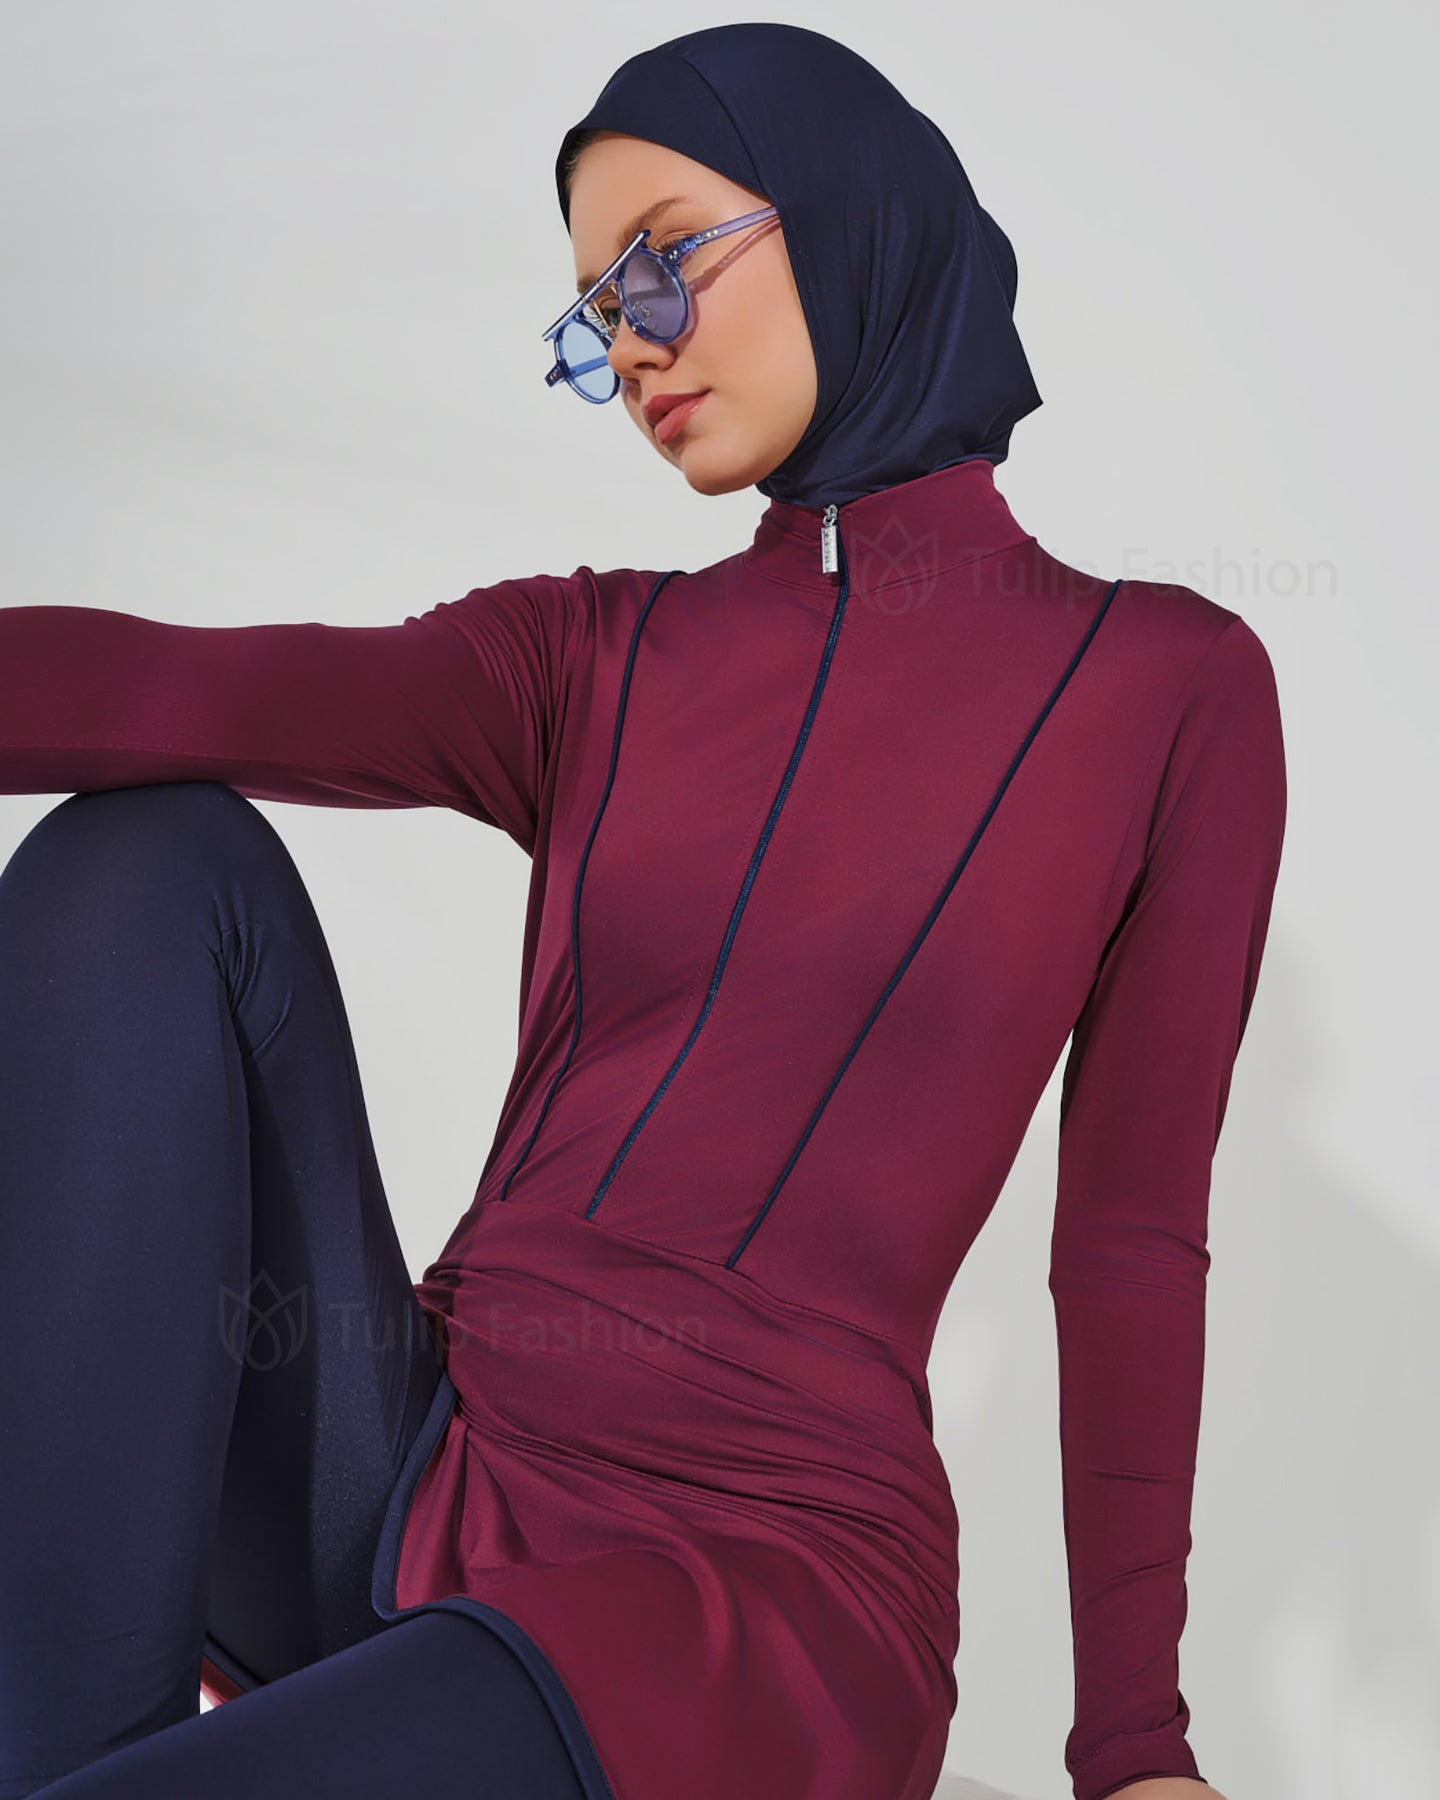 Muslim Swimsuit with hijab - Maroon